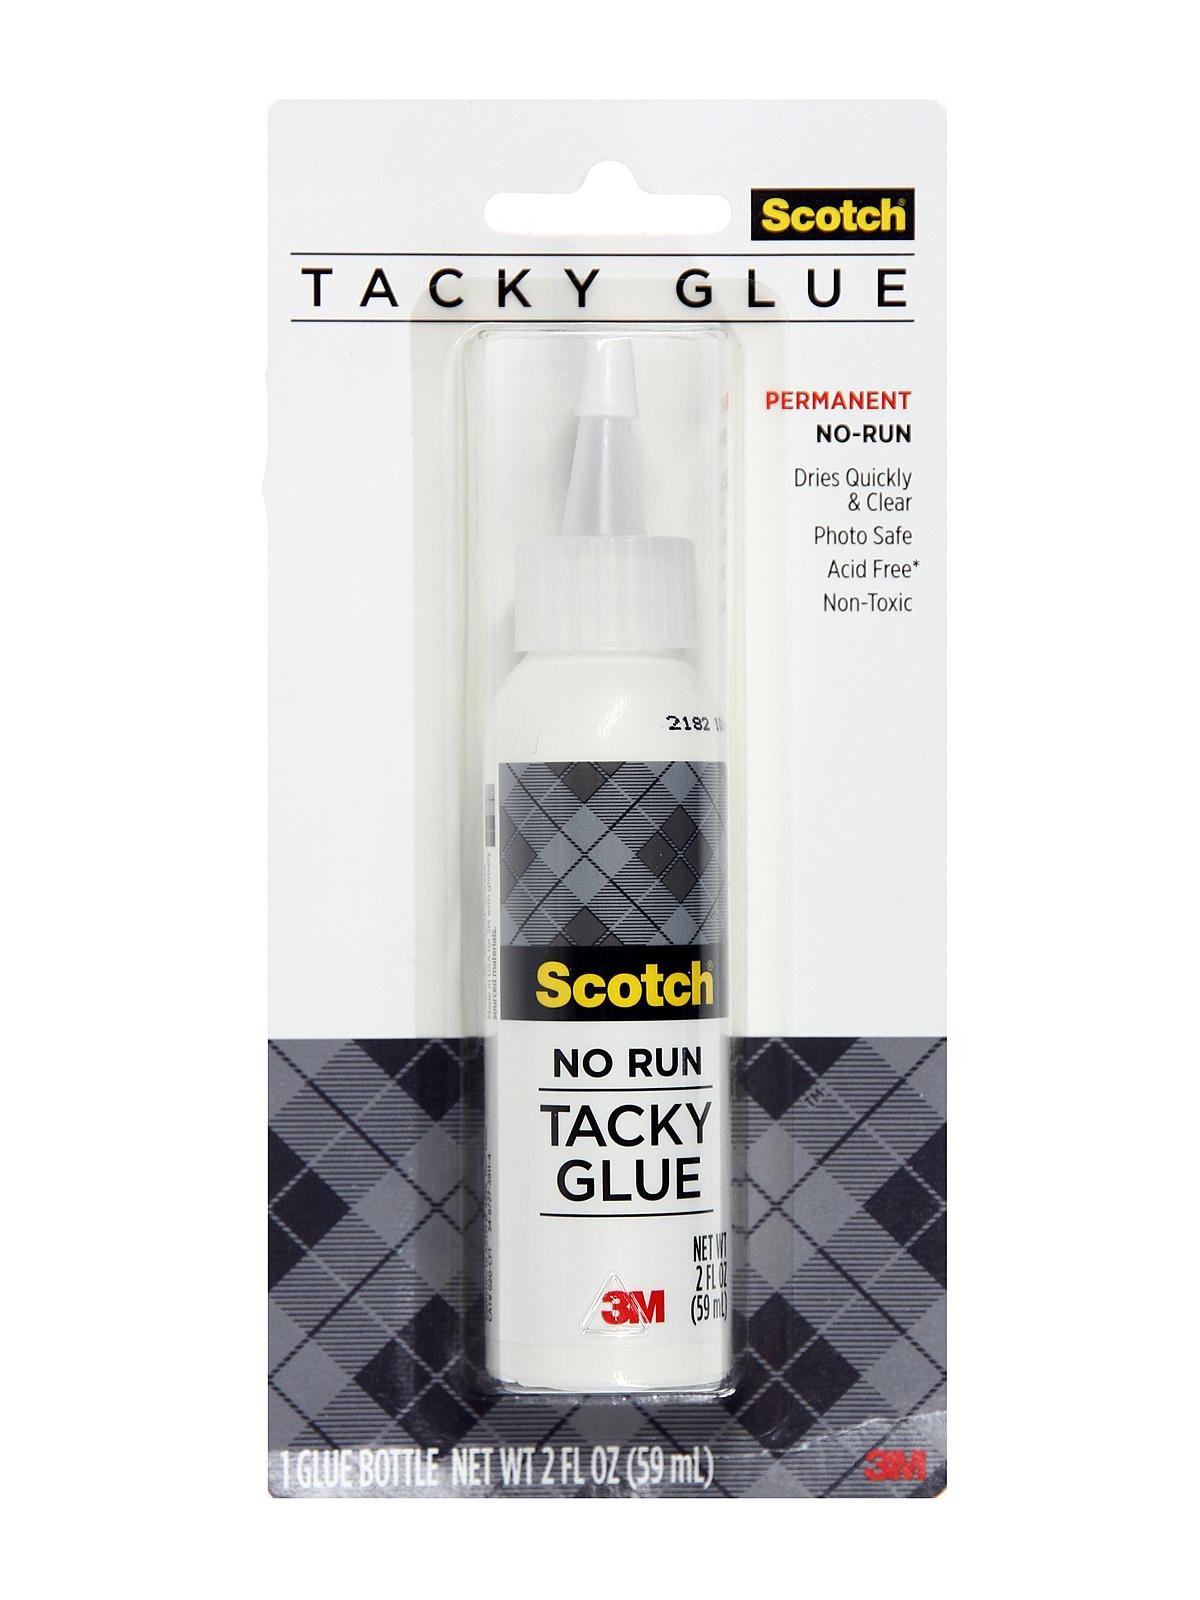 Scotch Maximum Strength Adhesive Glue